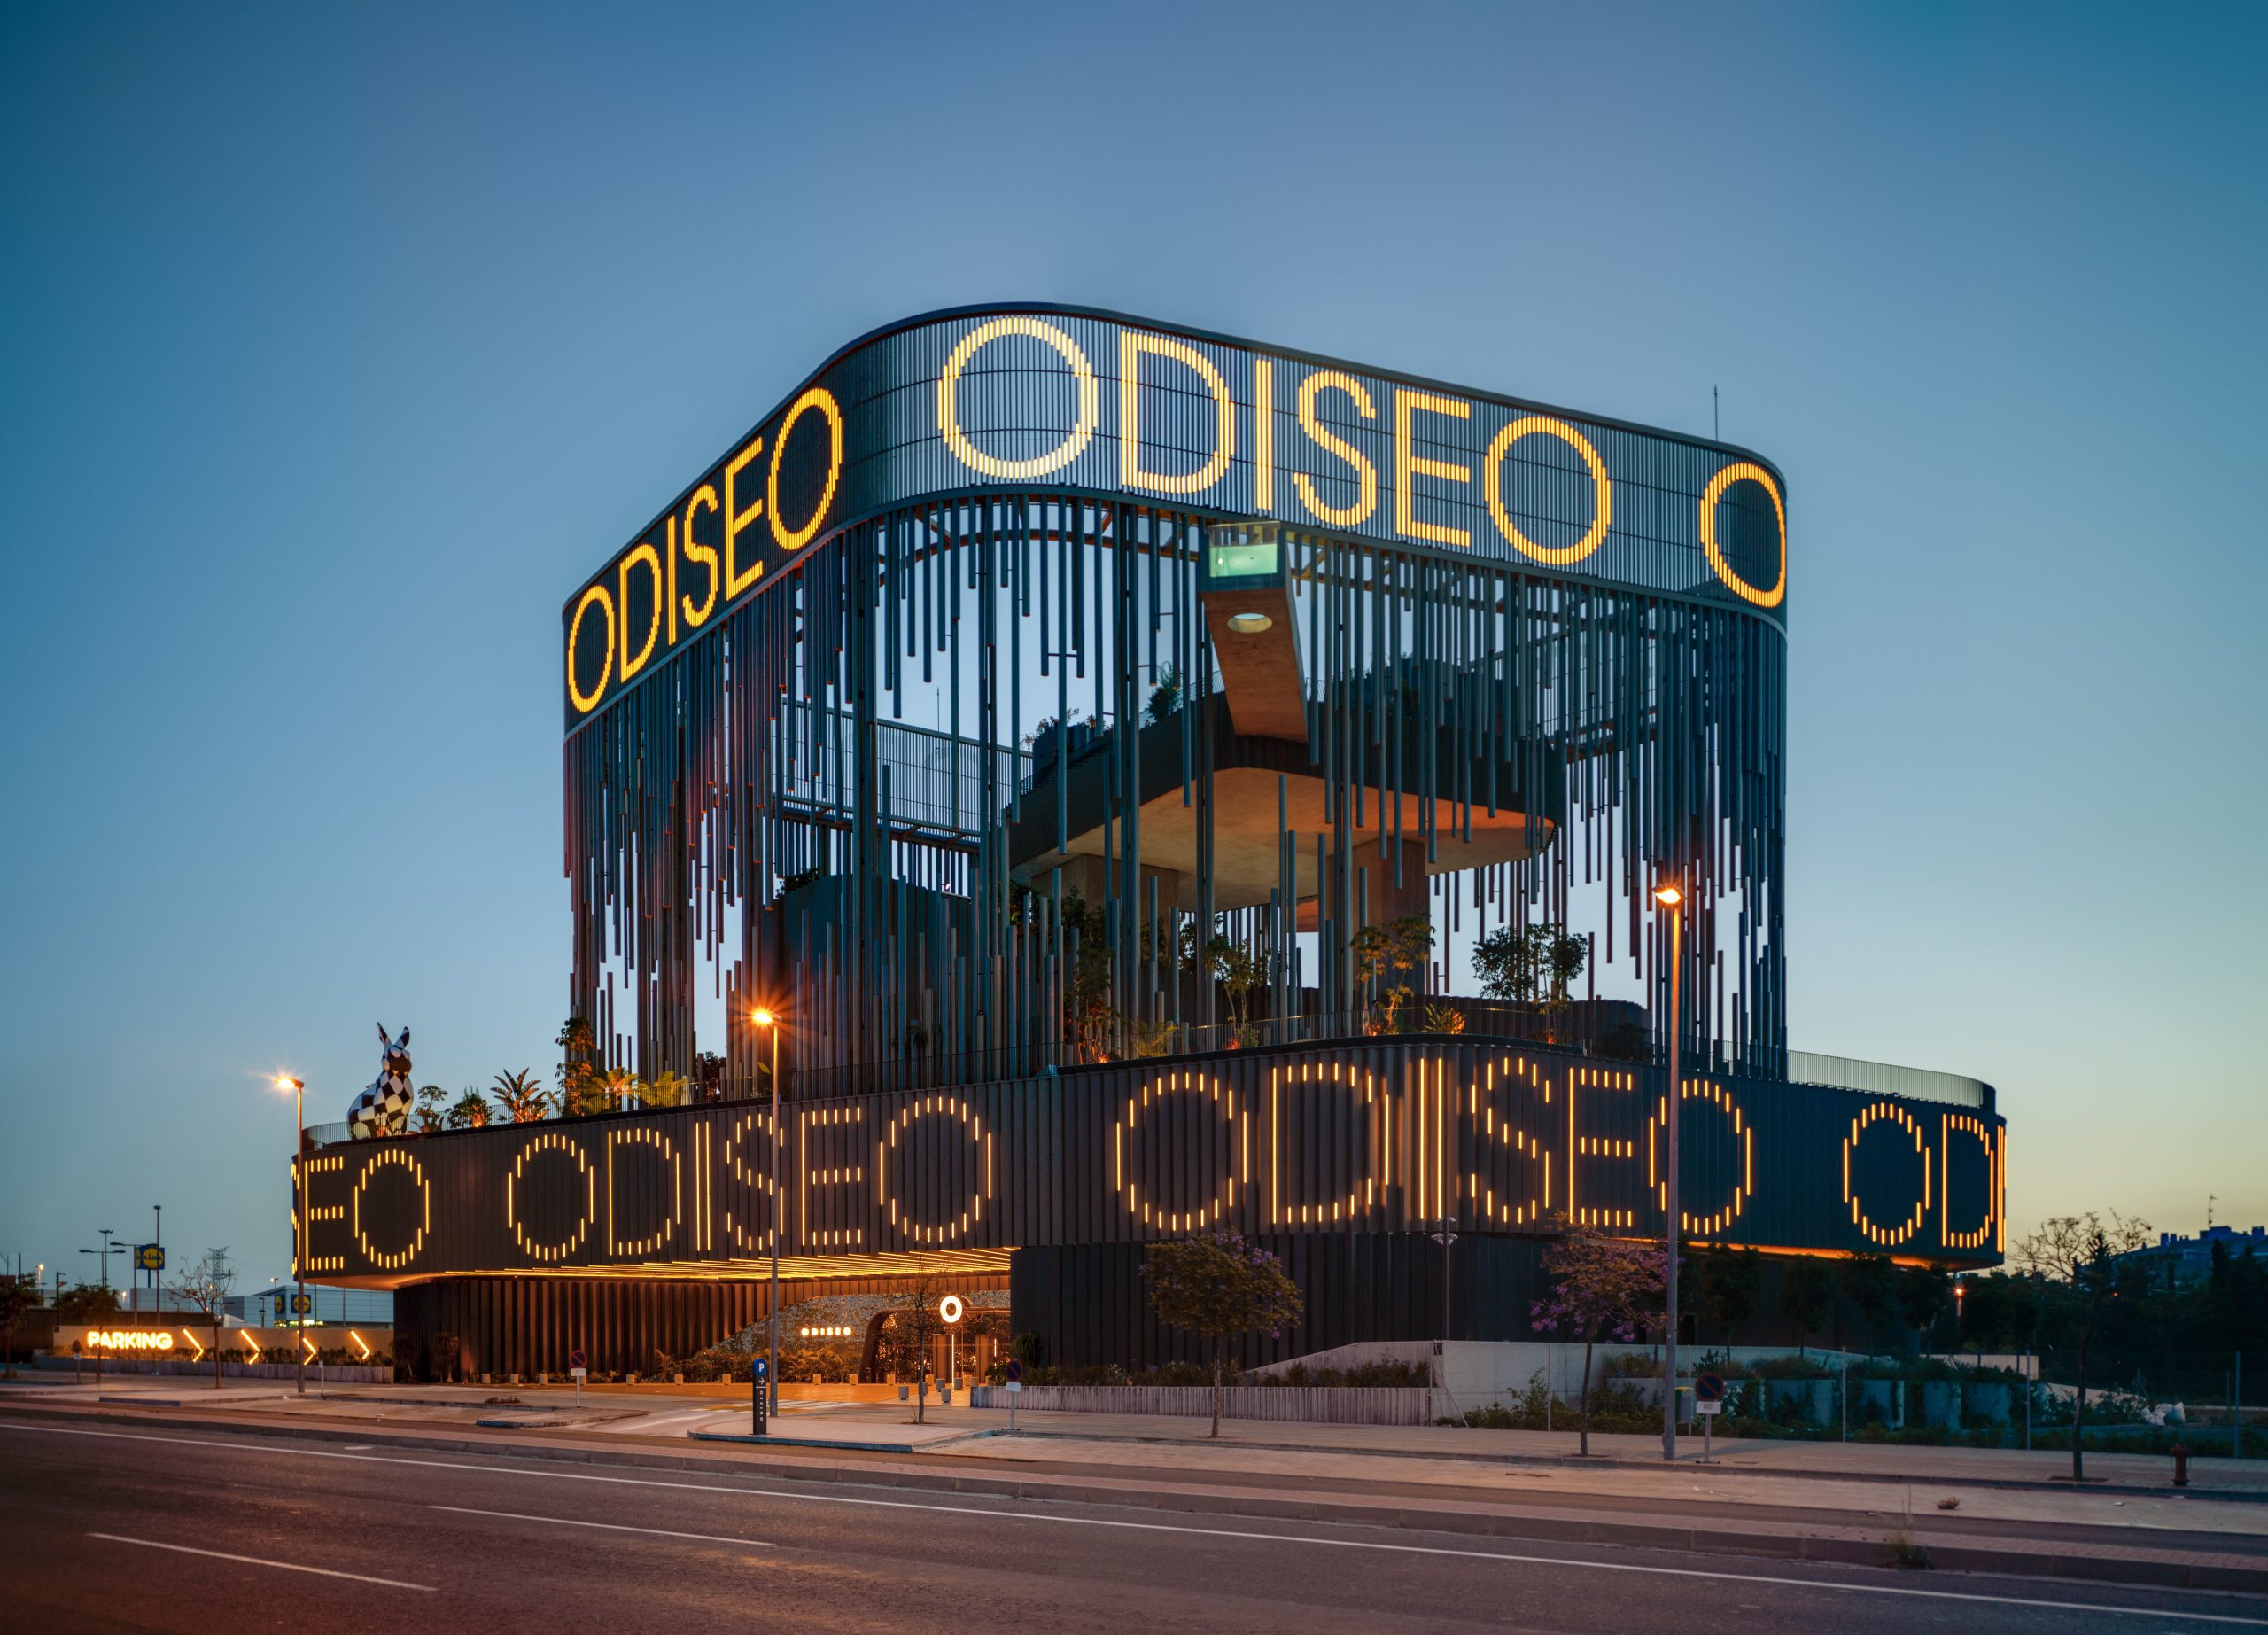 Casino Odiseo